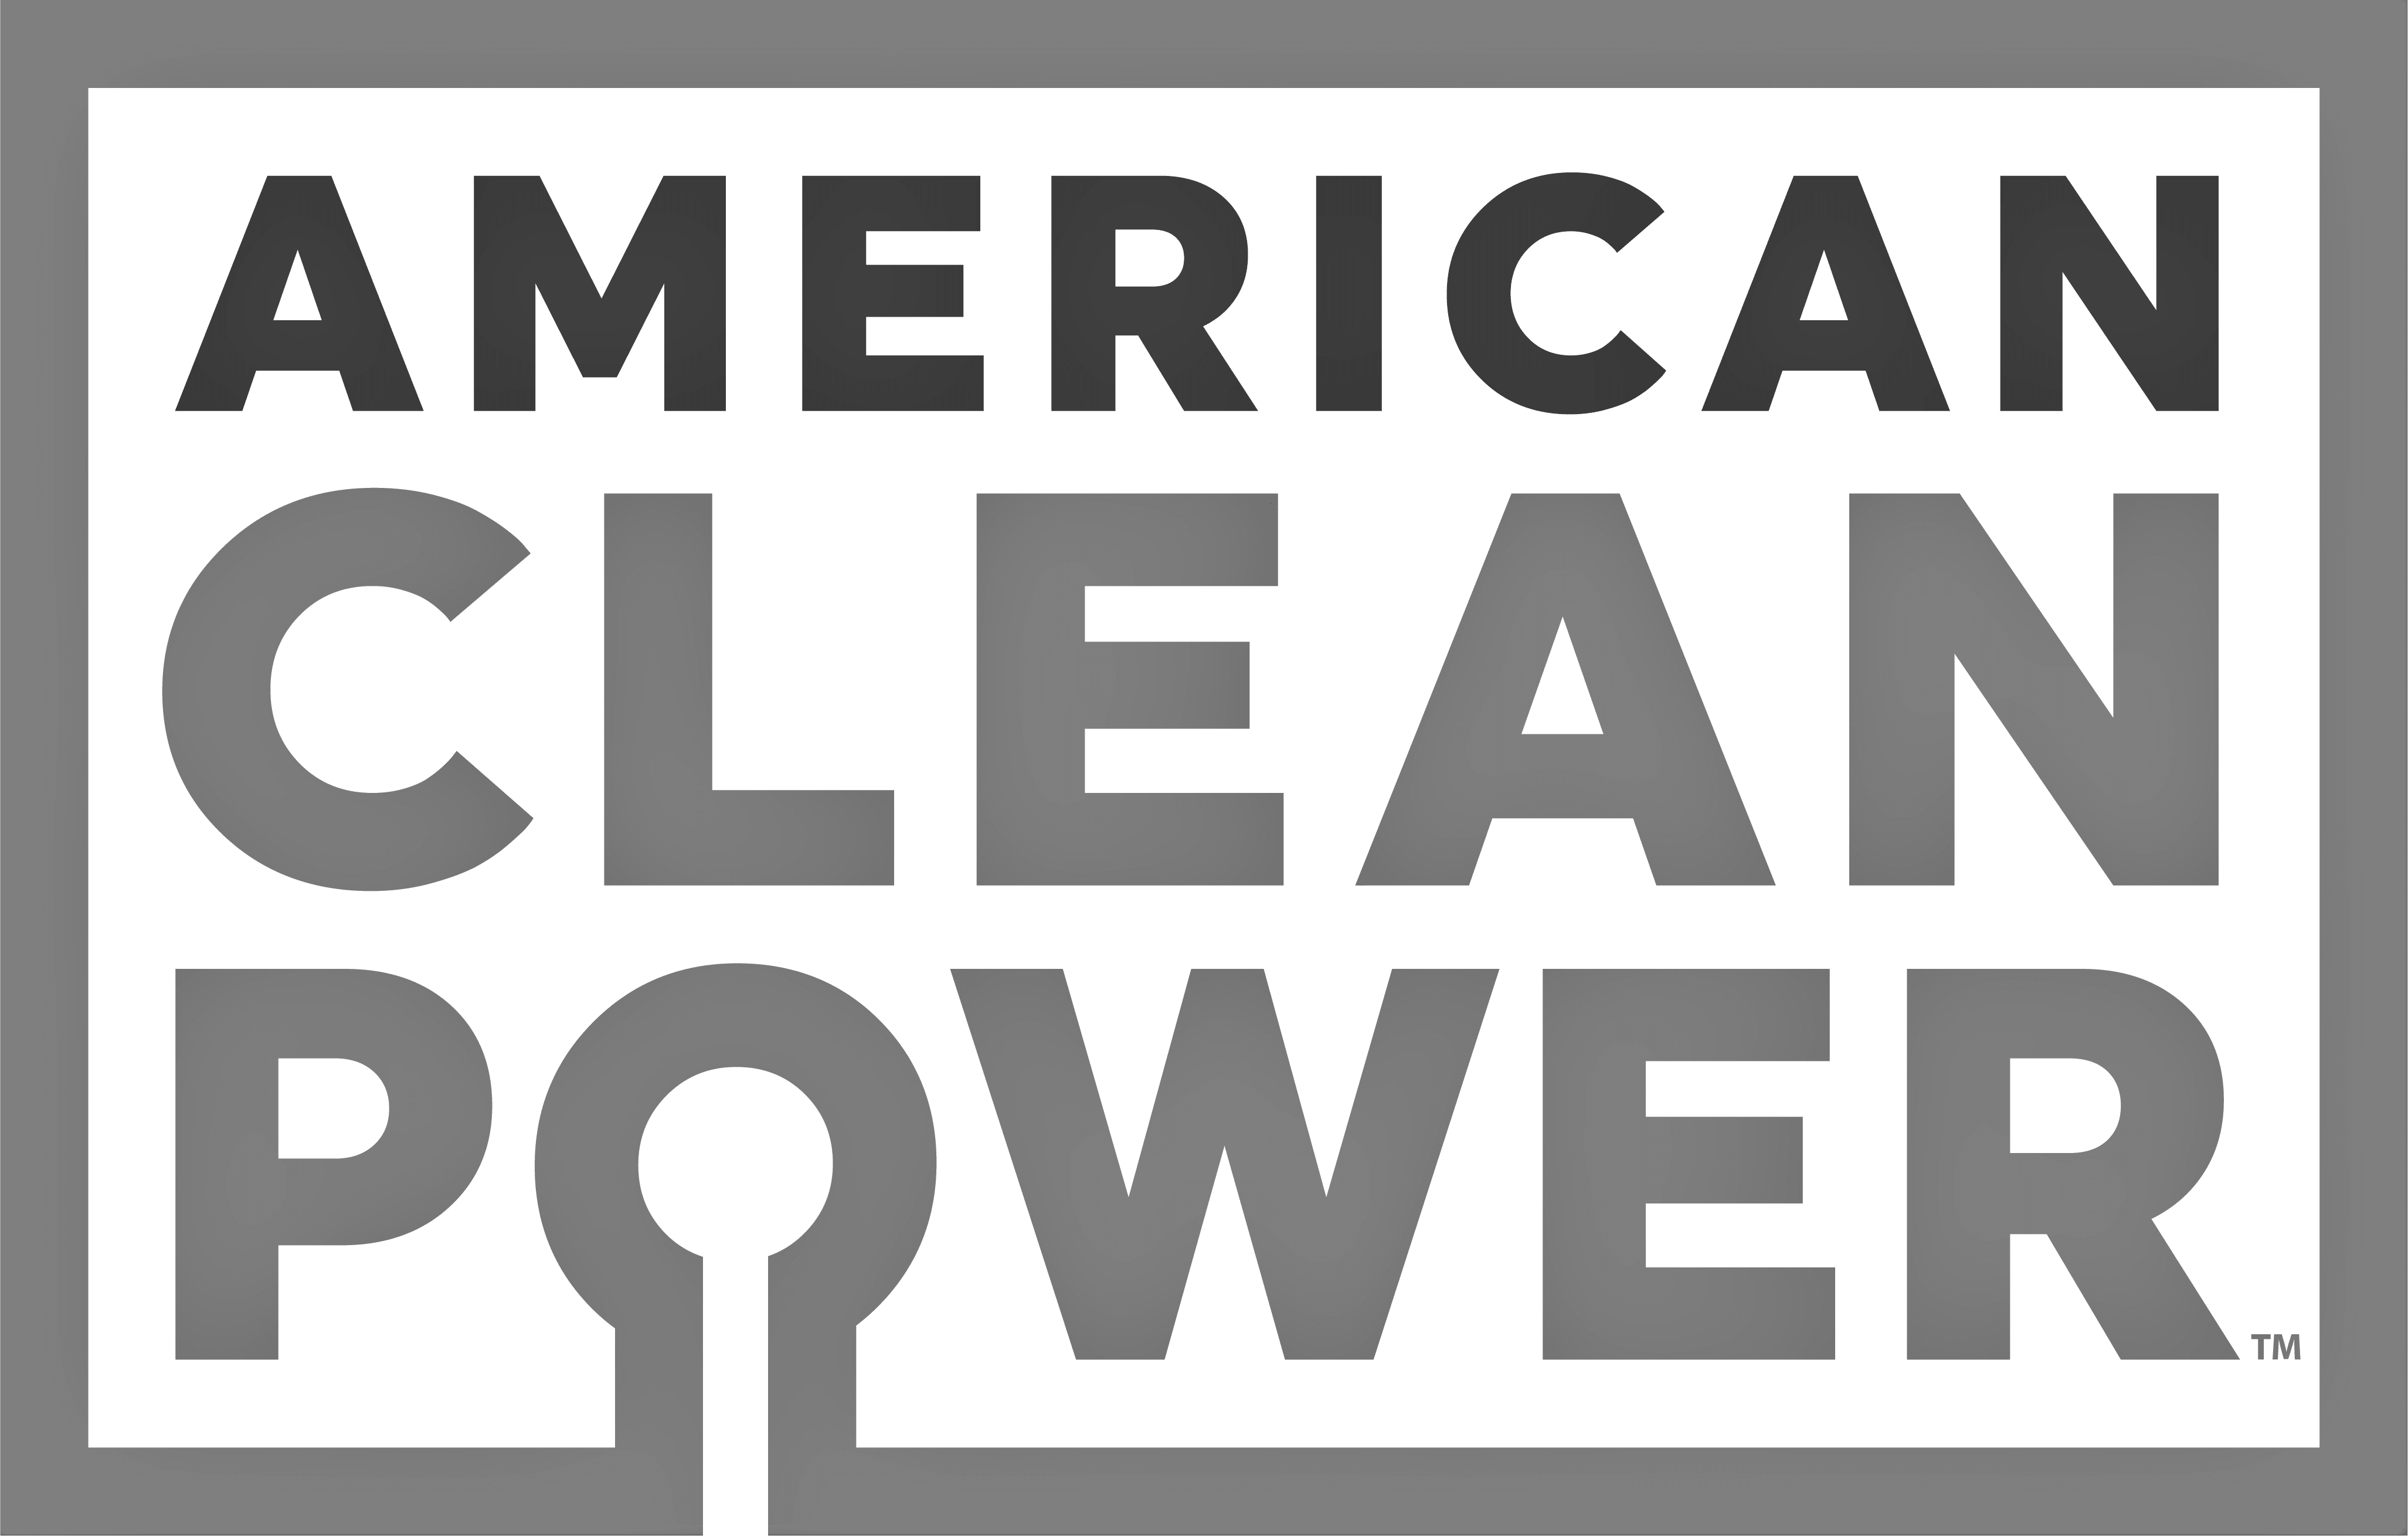 American Clean Power Association